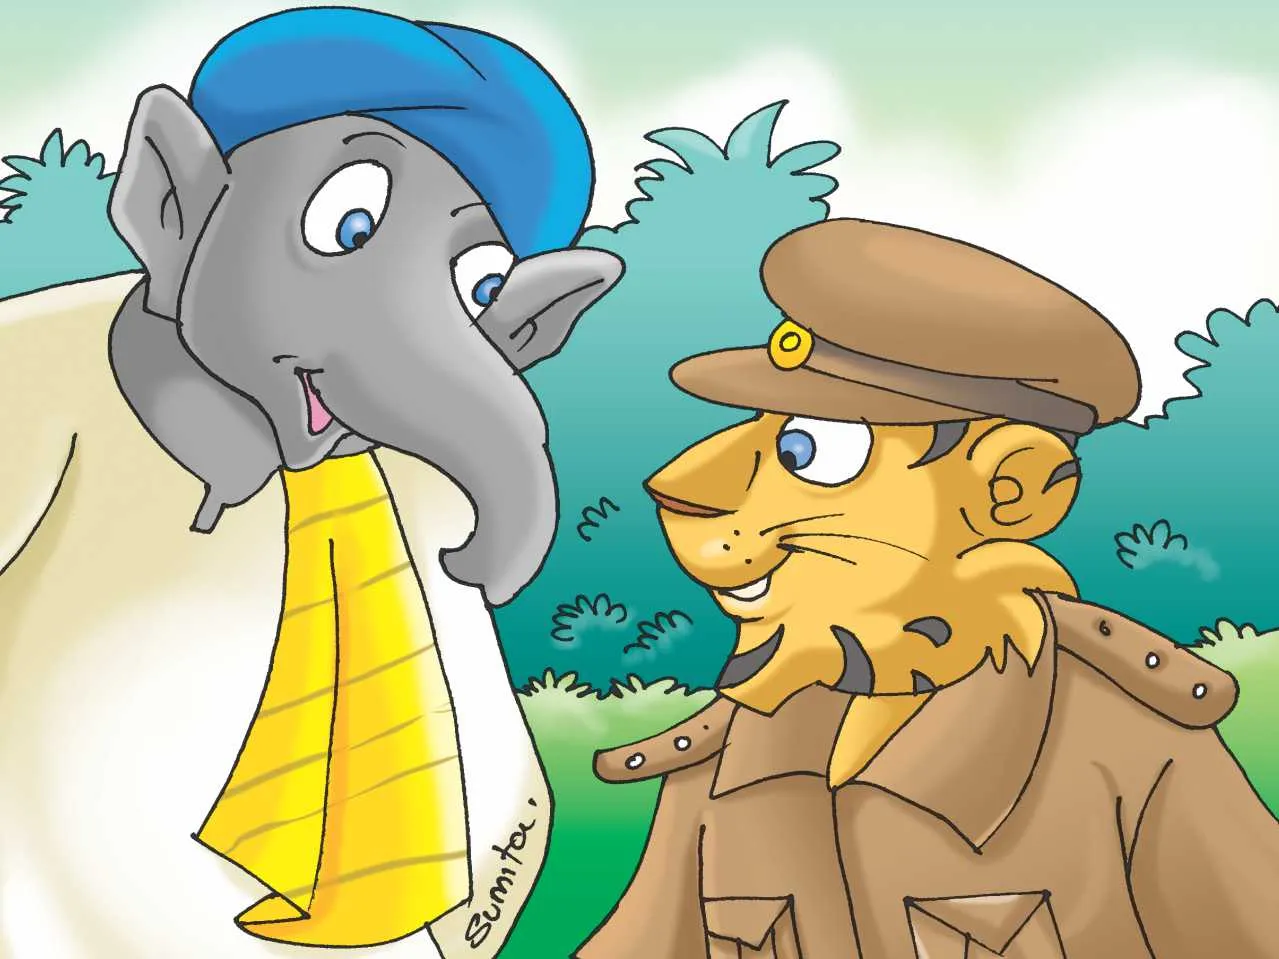 Elephant and lion talking cartoon image